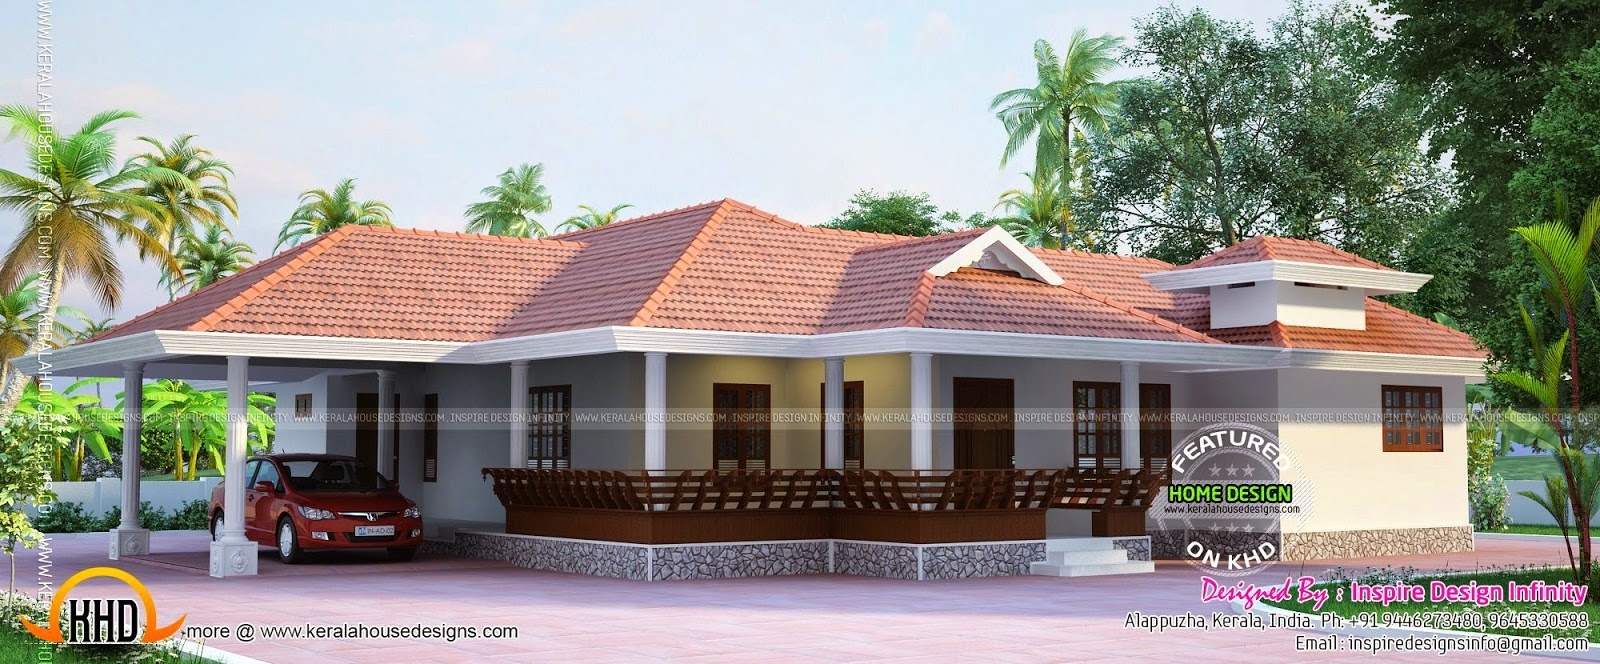 Interesting kerala model house exterior kerala home design and floor plans 9k throughout kerala model house